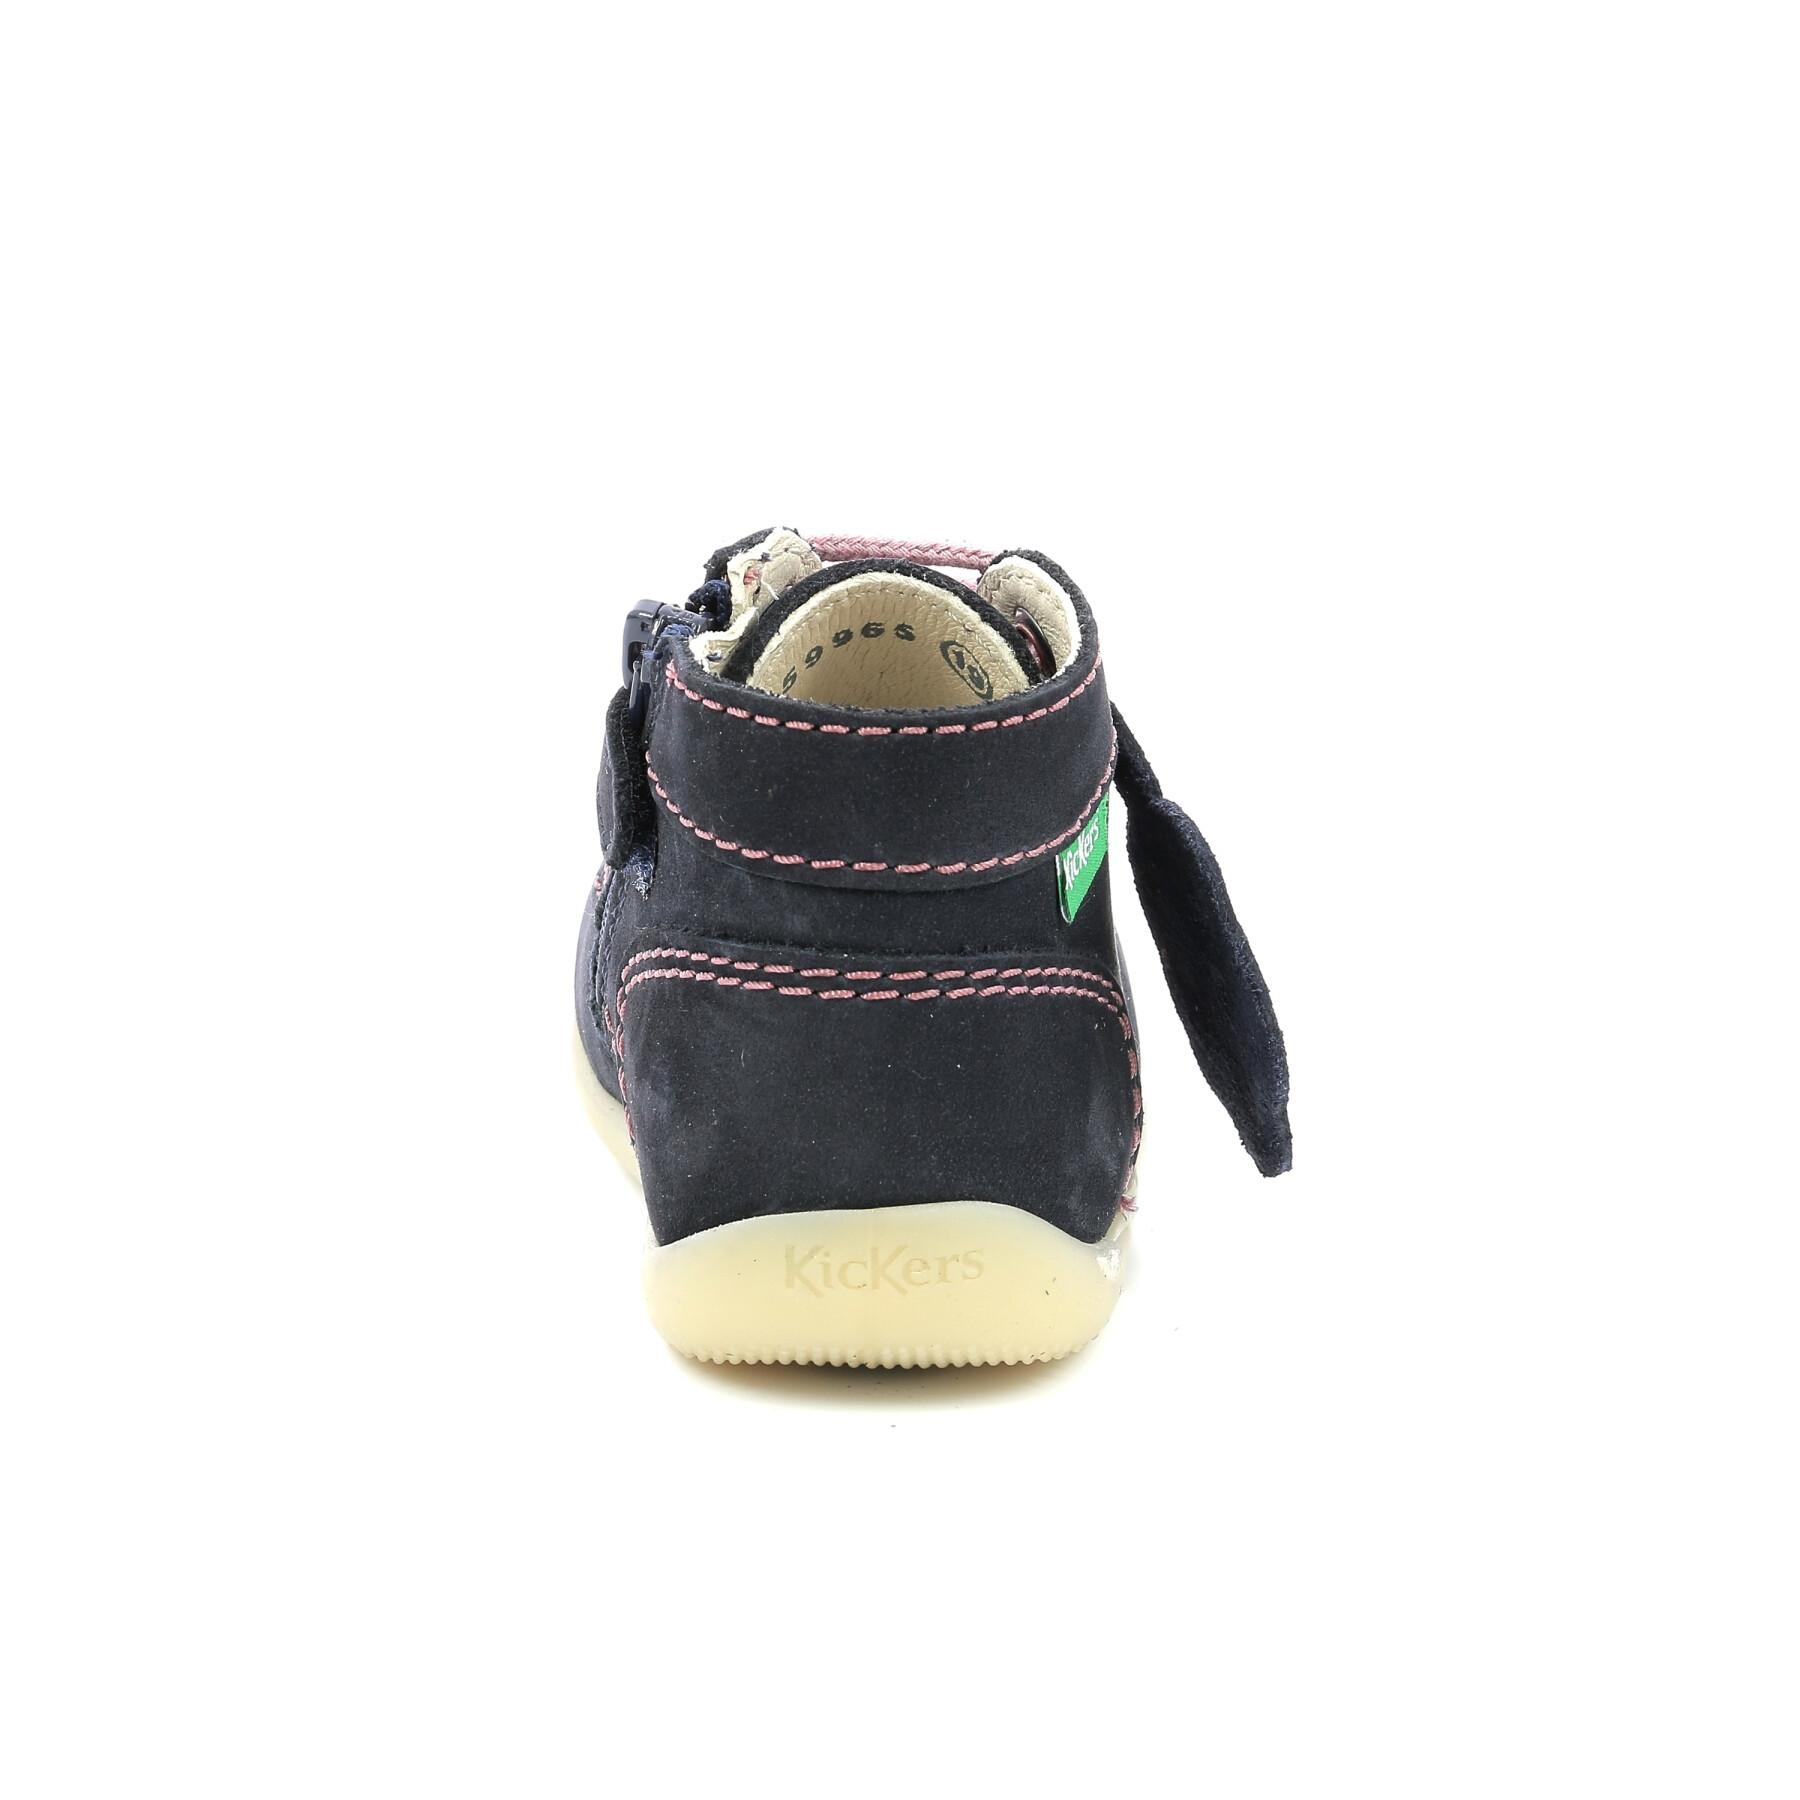 Baby shoes Kickers Bonzip